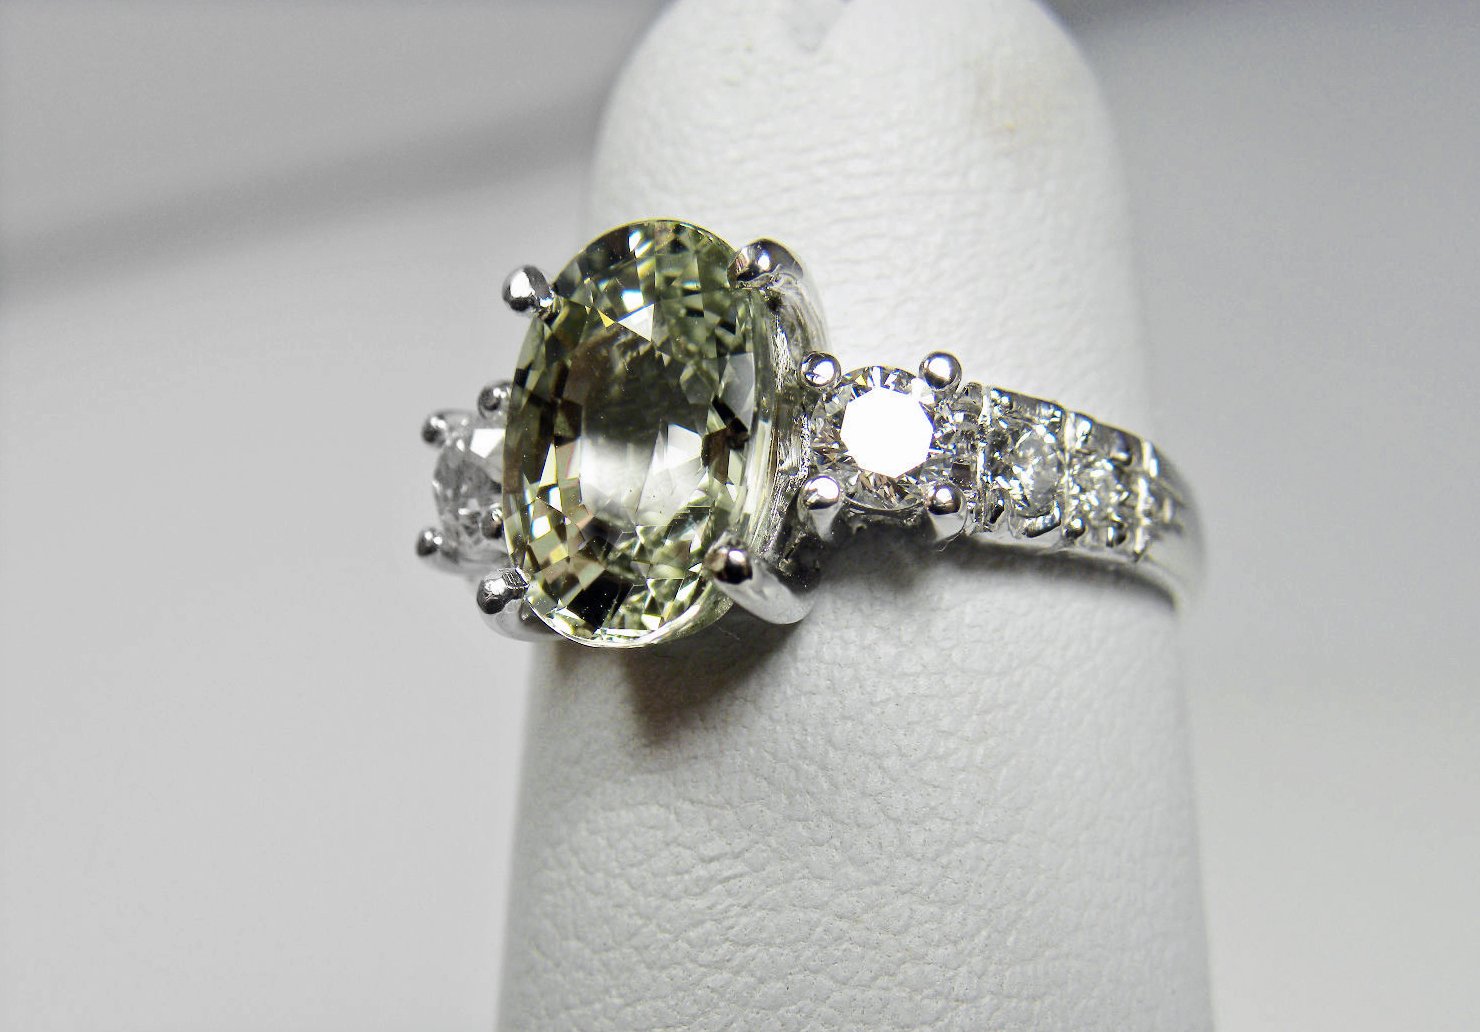 Certified Sapphire & Diamond Fine Engagement Ring 18k White Gold